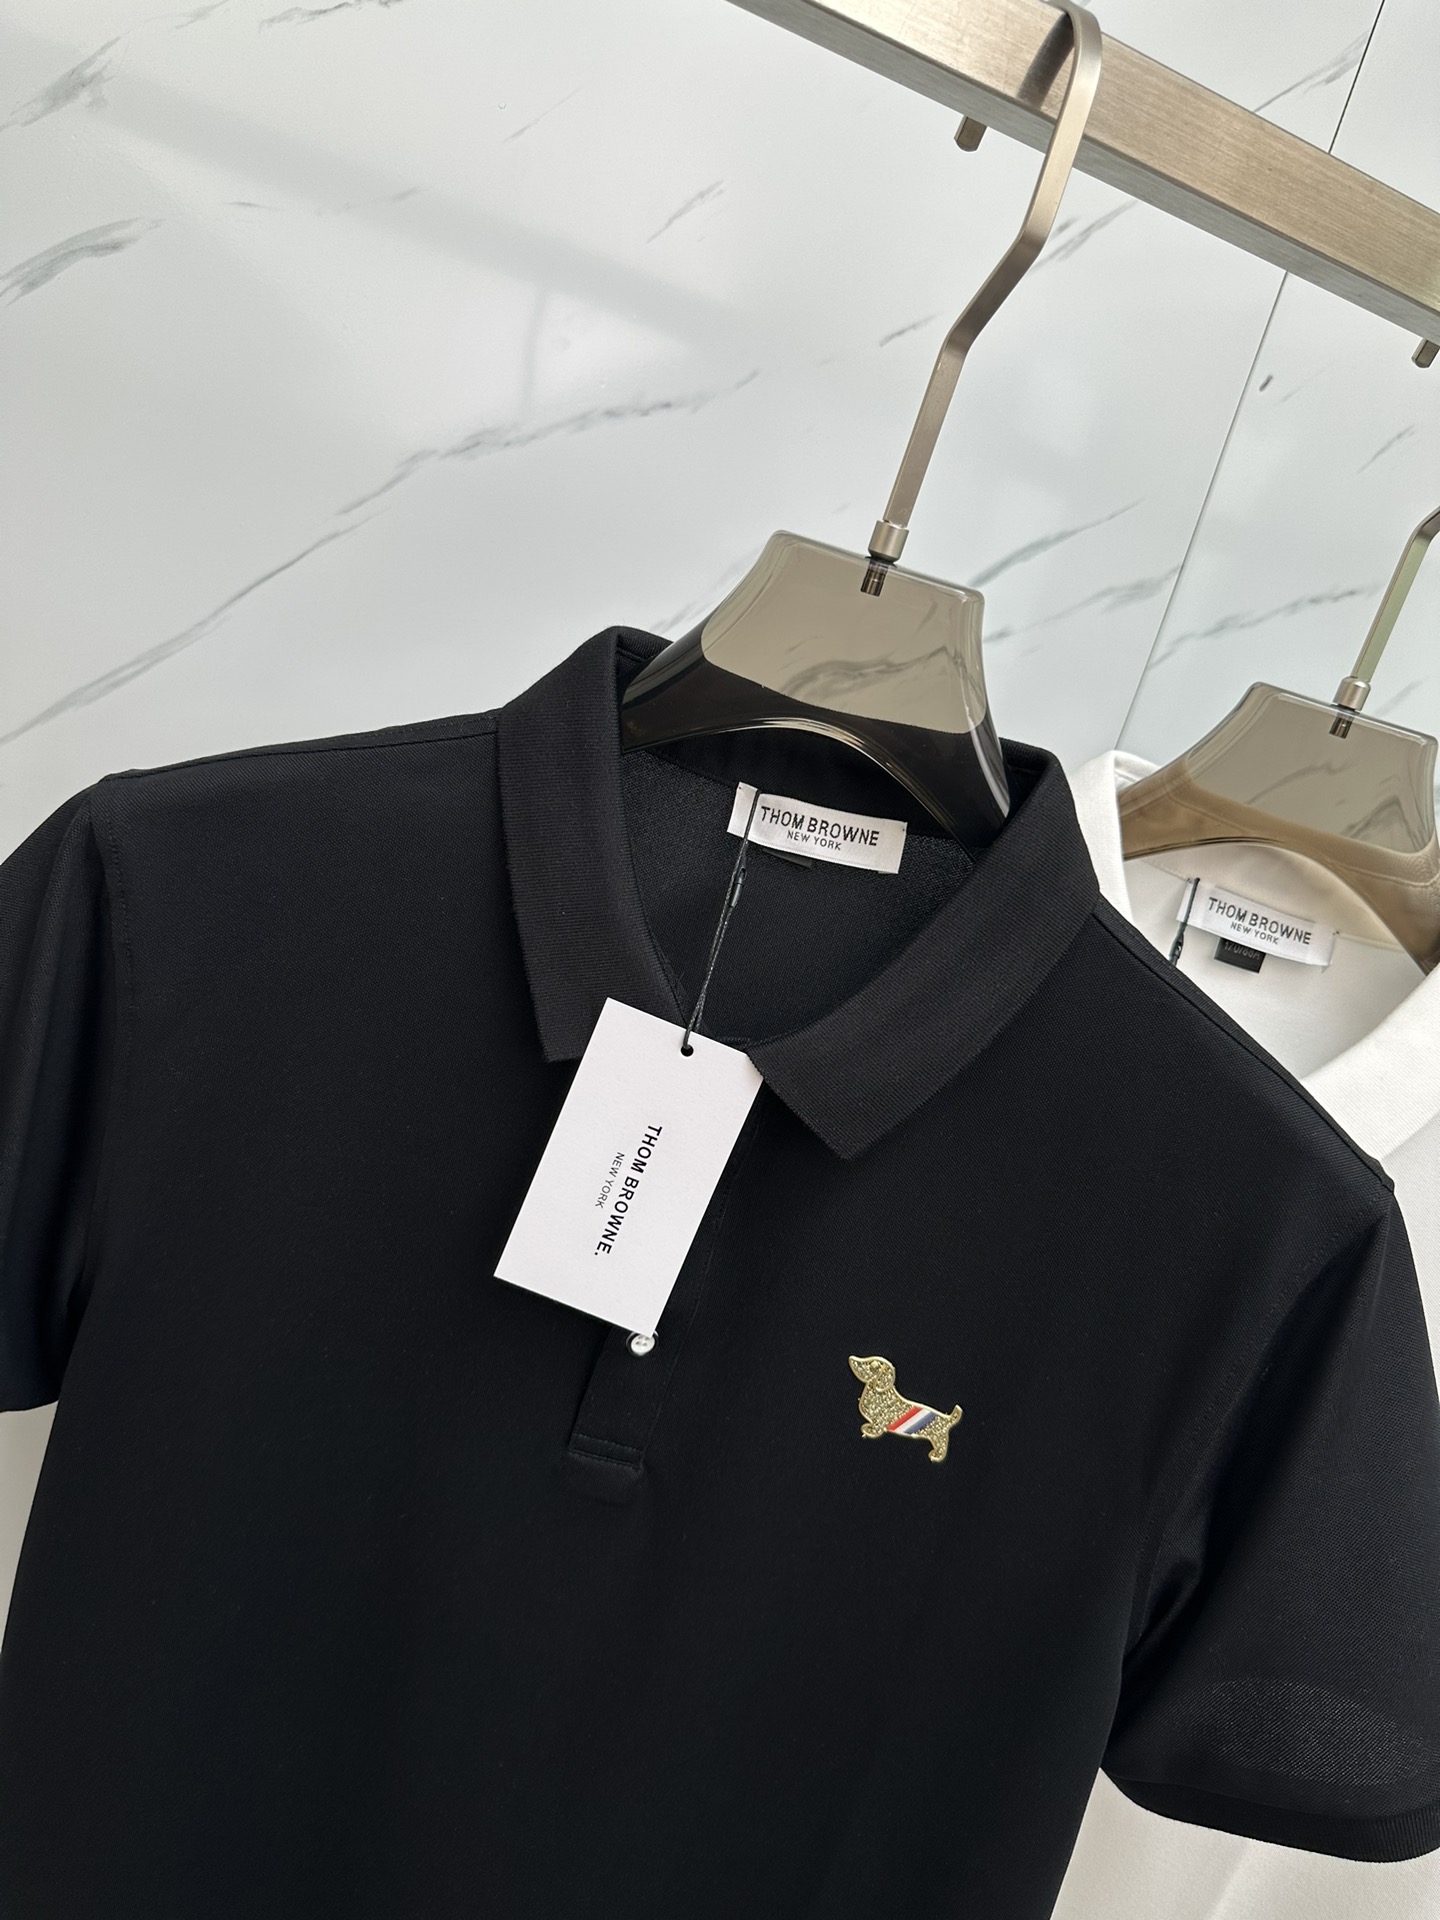 TB最新最顶级版本Polo衫短袖最顶级的品质.玉蚕丝顶级制作工艺进口面料专柜款独特设计采用进口高端订制进